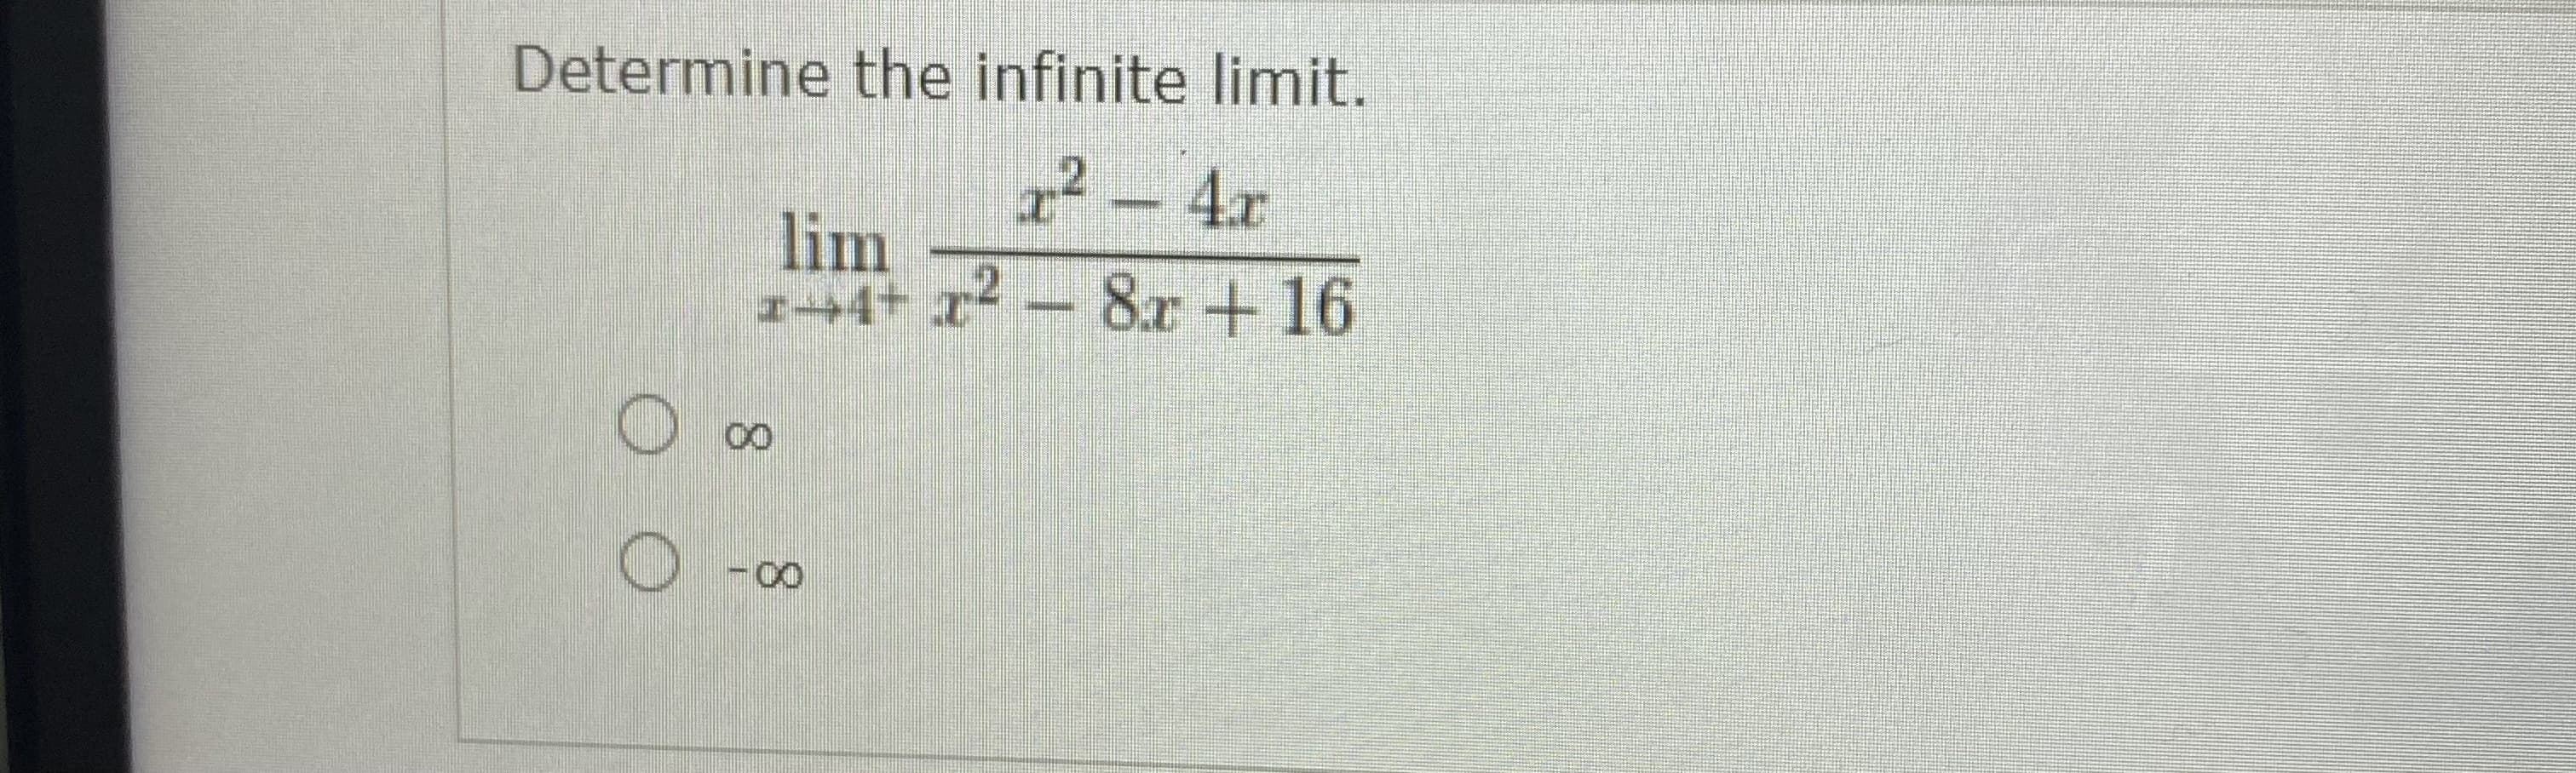 Determine the infinite limit.
x² -
4.x
lim
1+4+ x2 - 8r + 16
